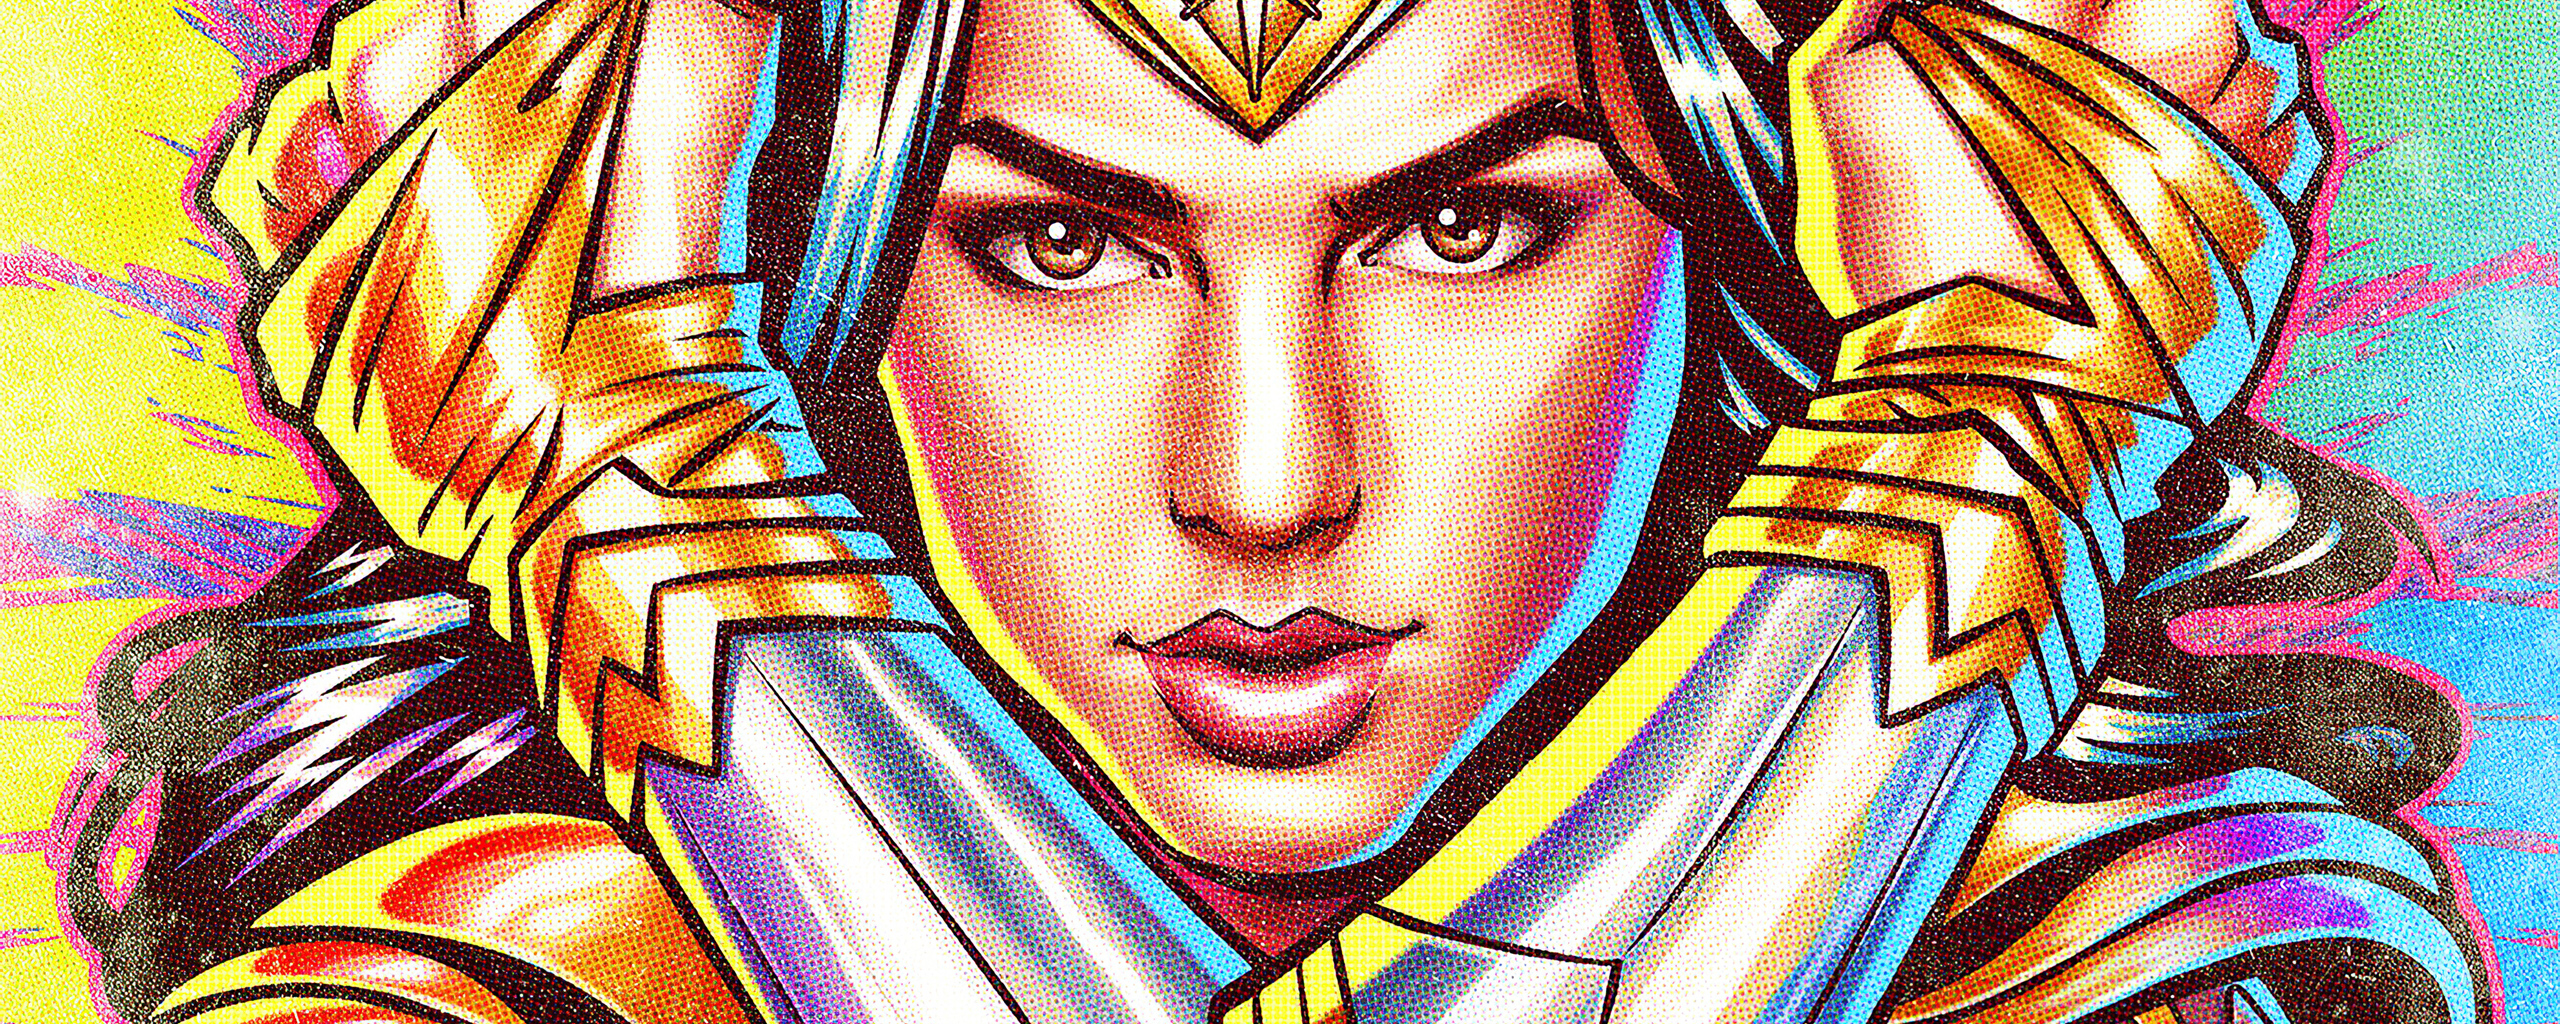 Wonder Woman Lk21 Download / 1440x2960 Wonder Woman 1984 4k 2020 Movie